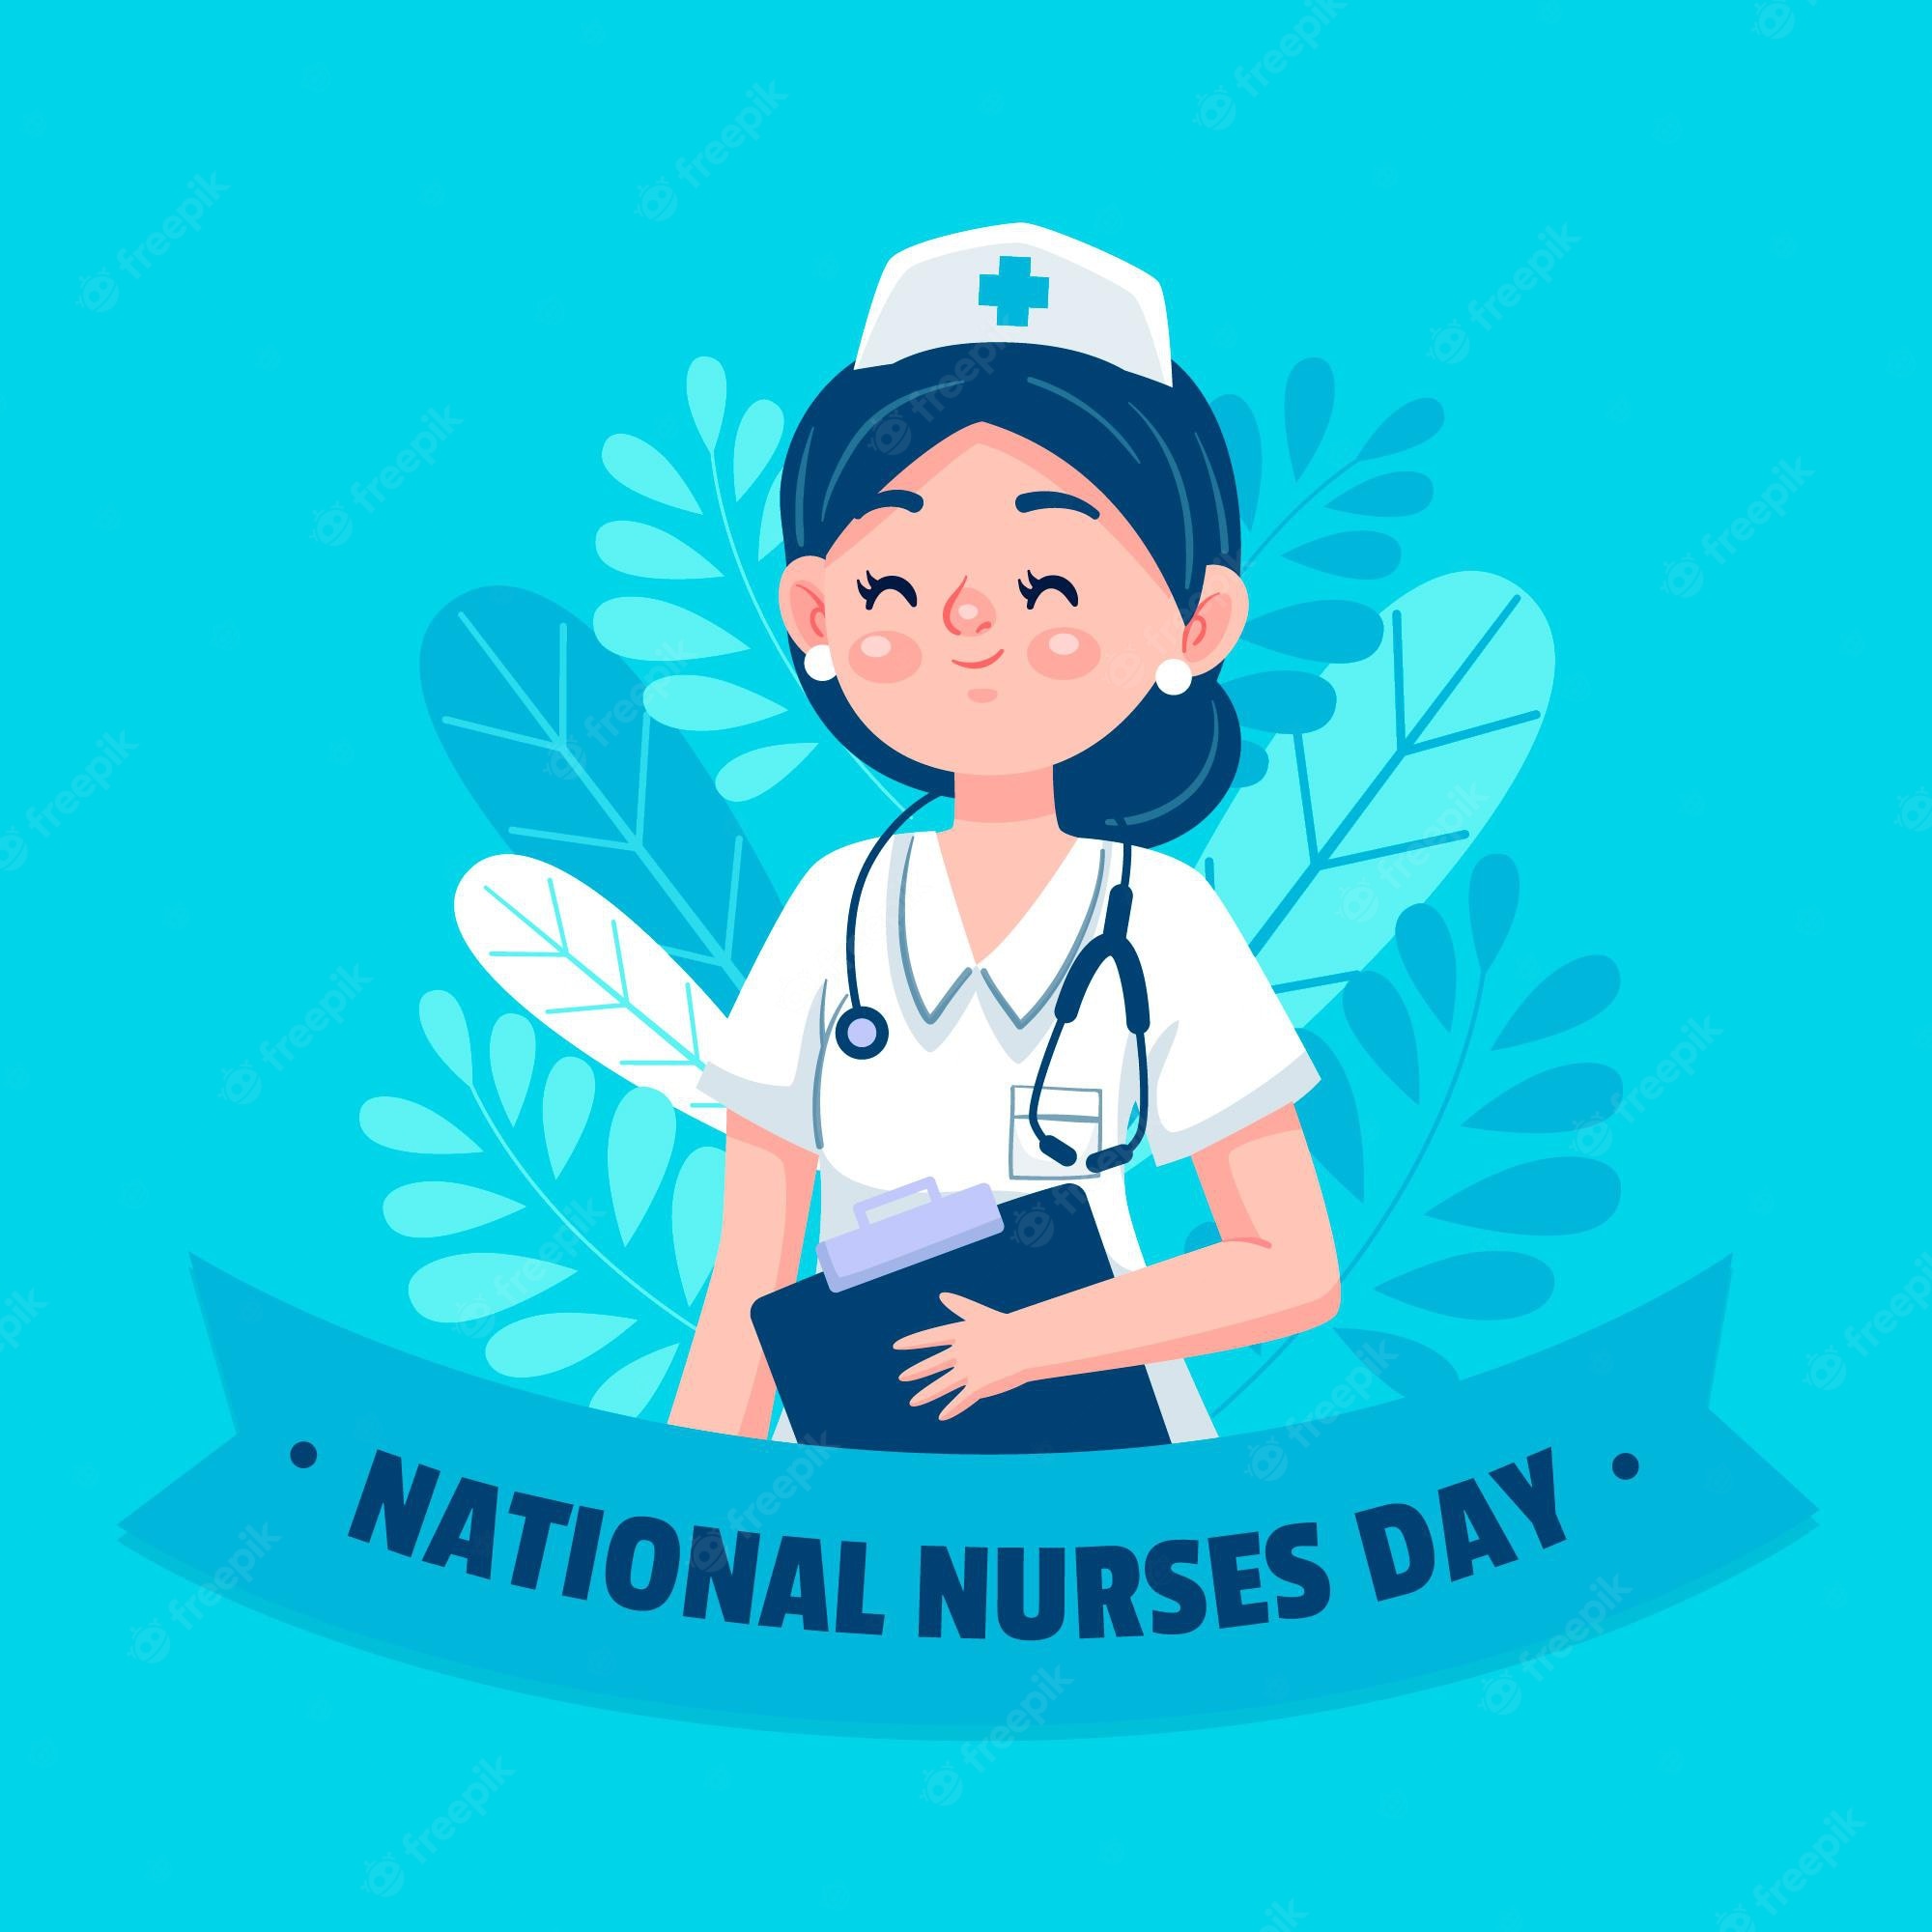 Nurse Day Image